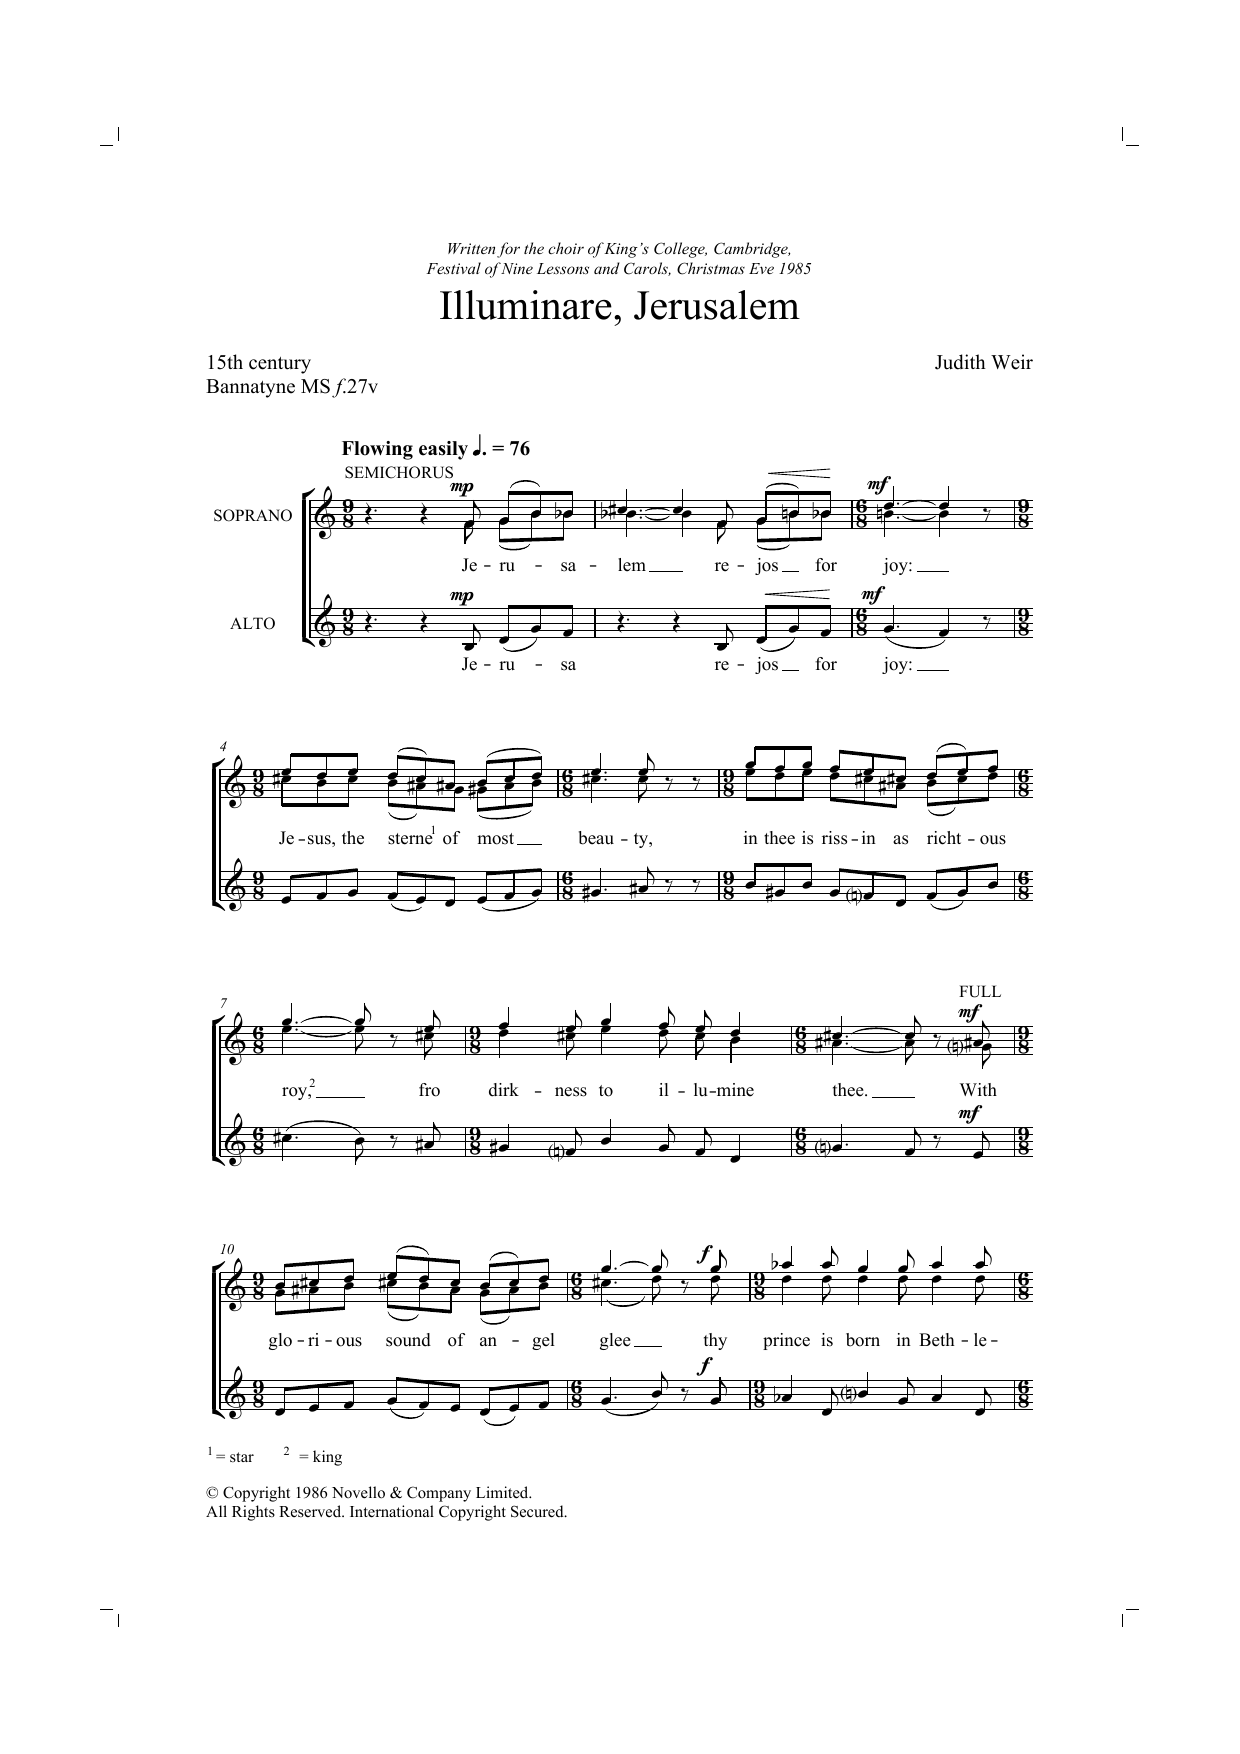 Judith Weir Illuminare Jerusalem Sheet Music Notes & Chords for Choir - Download or Print PDF